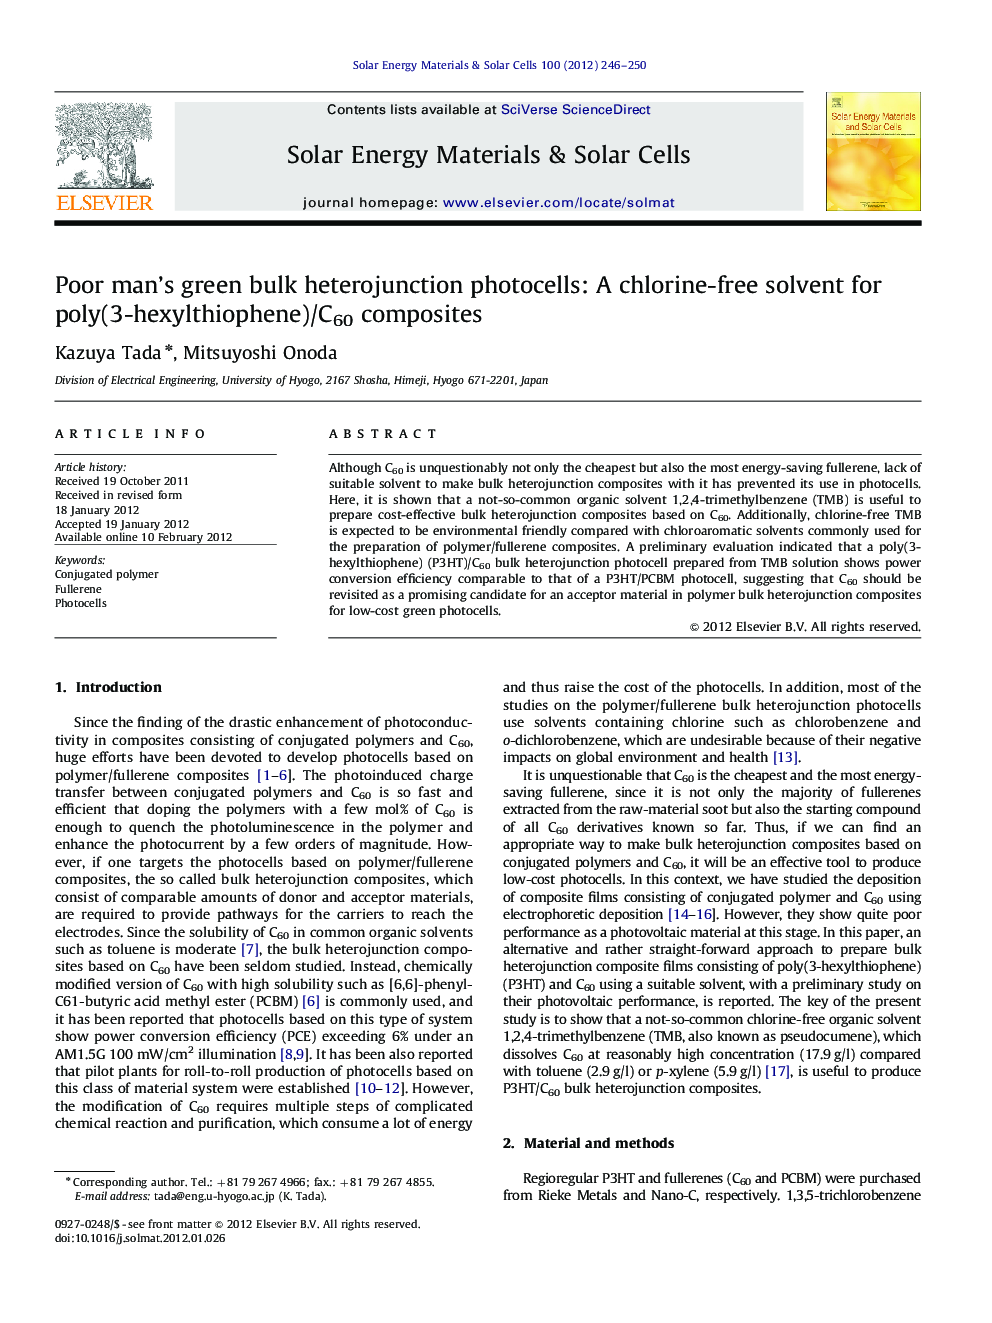 Poor man's green bulk heterojunction photocells: A chlorine-free solvent for poly(3-hexylthiophene)/C60 composites